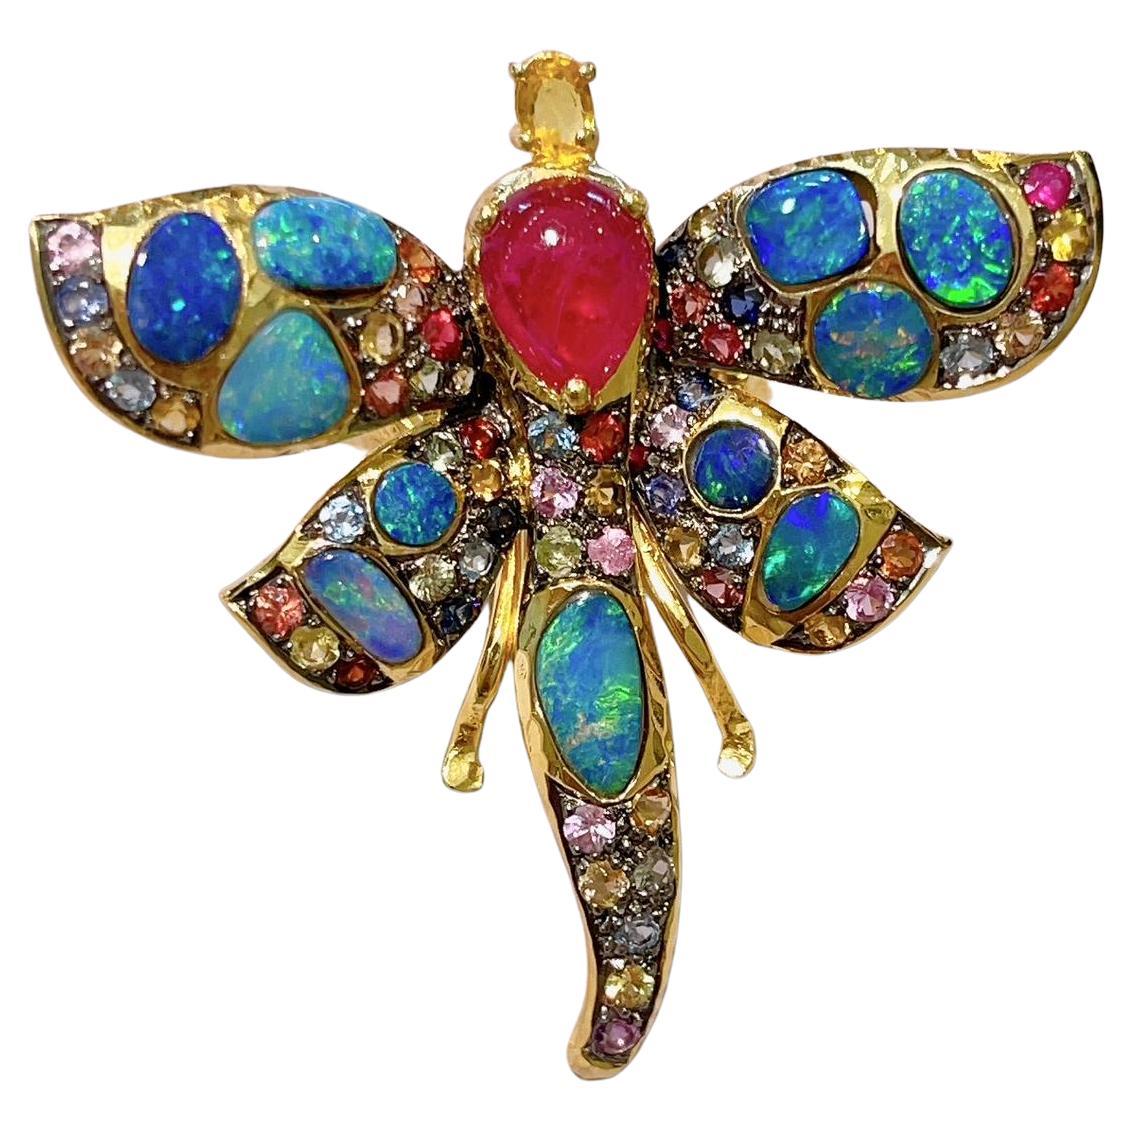 Bochic “Capri” Opal & Ruby & Sapphire Cocktail Ring Set in 22k Gold & Silver